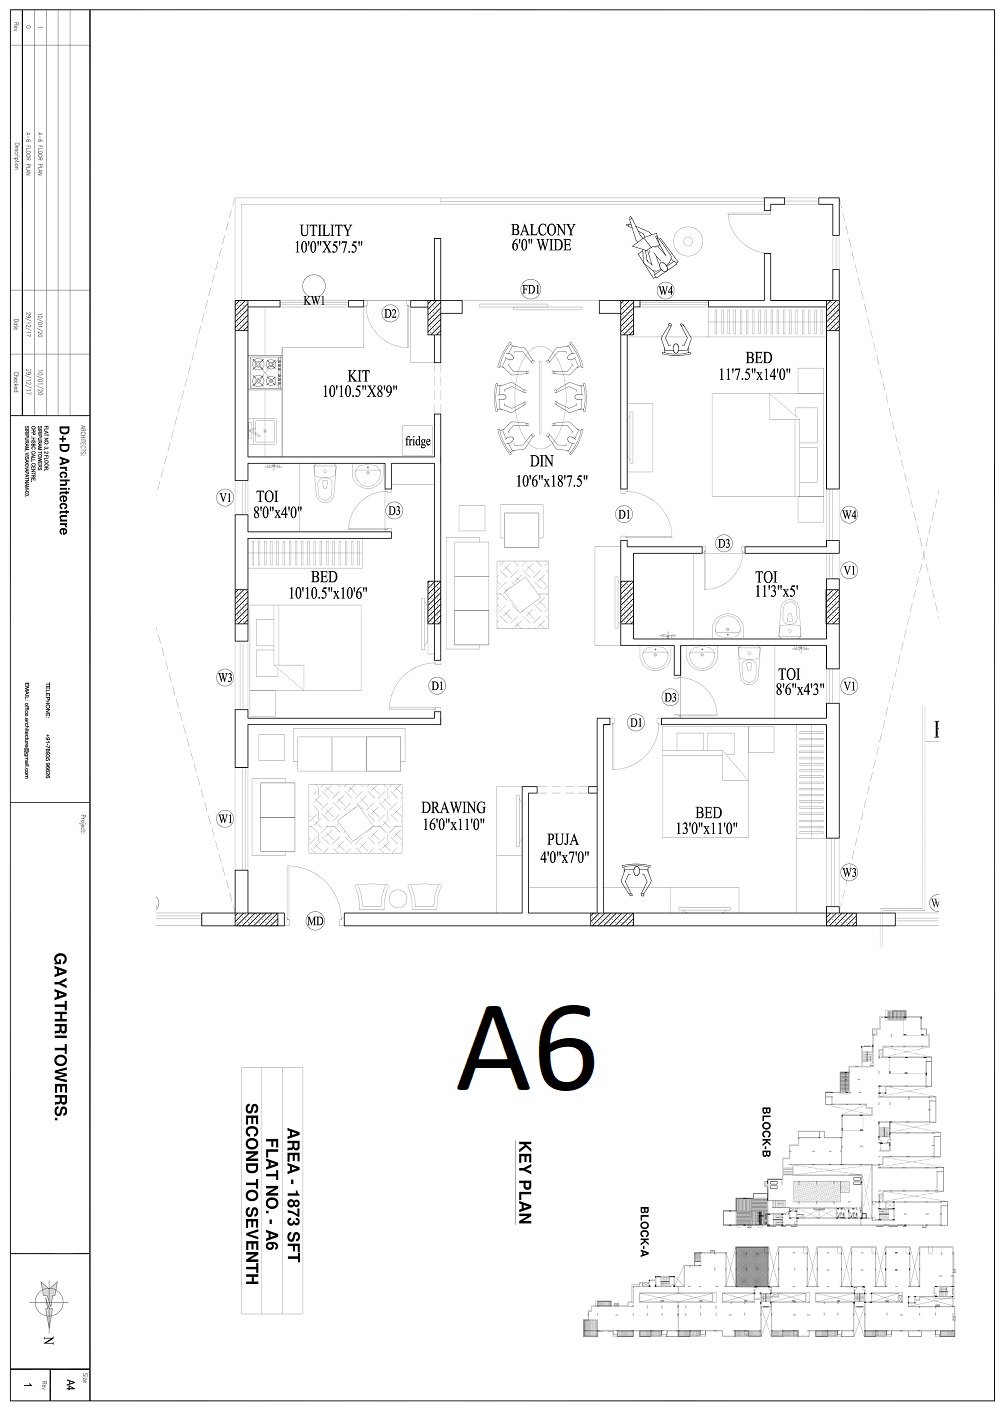 A6 - Tipcal Floor Plan